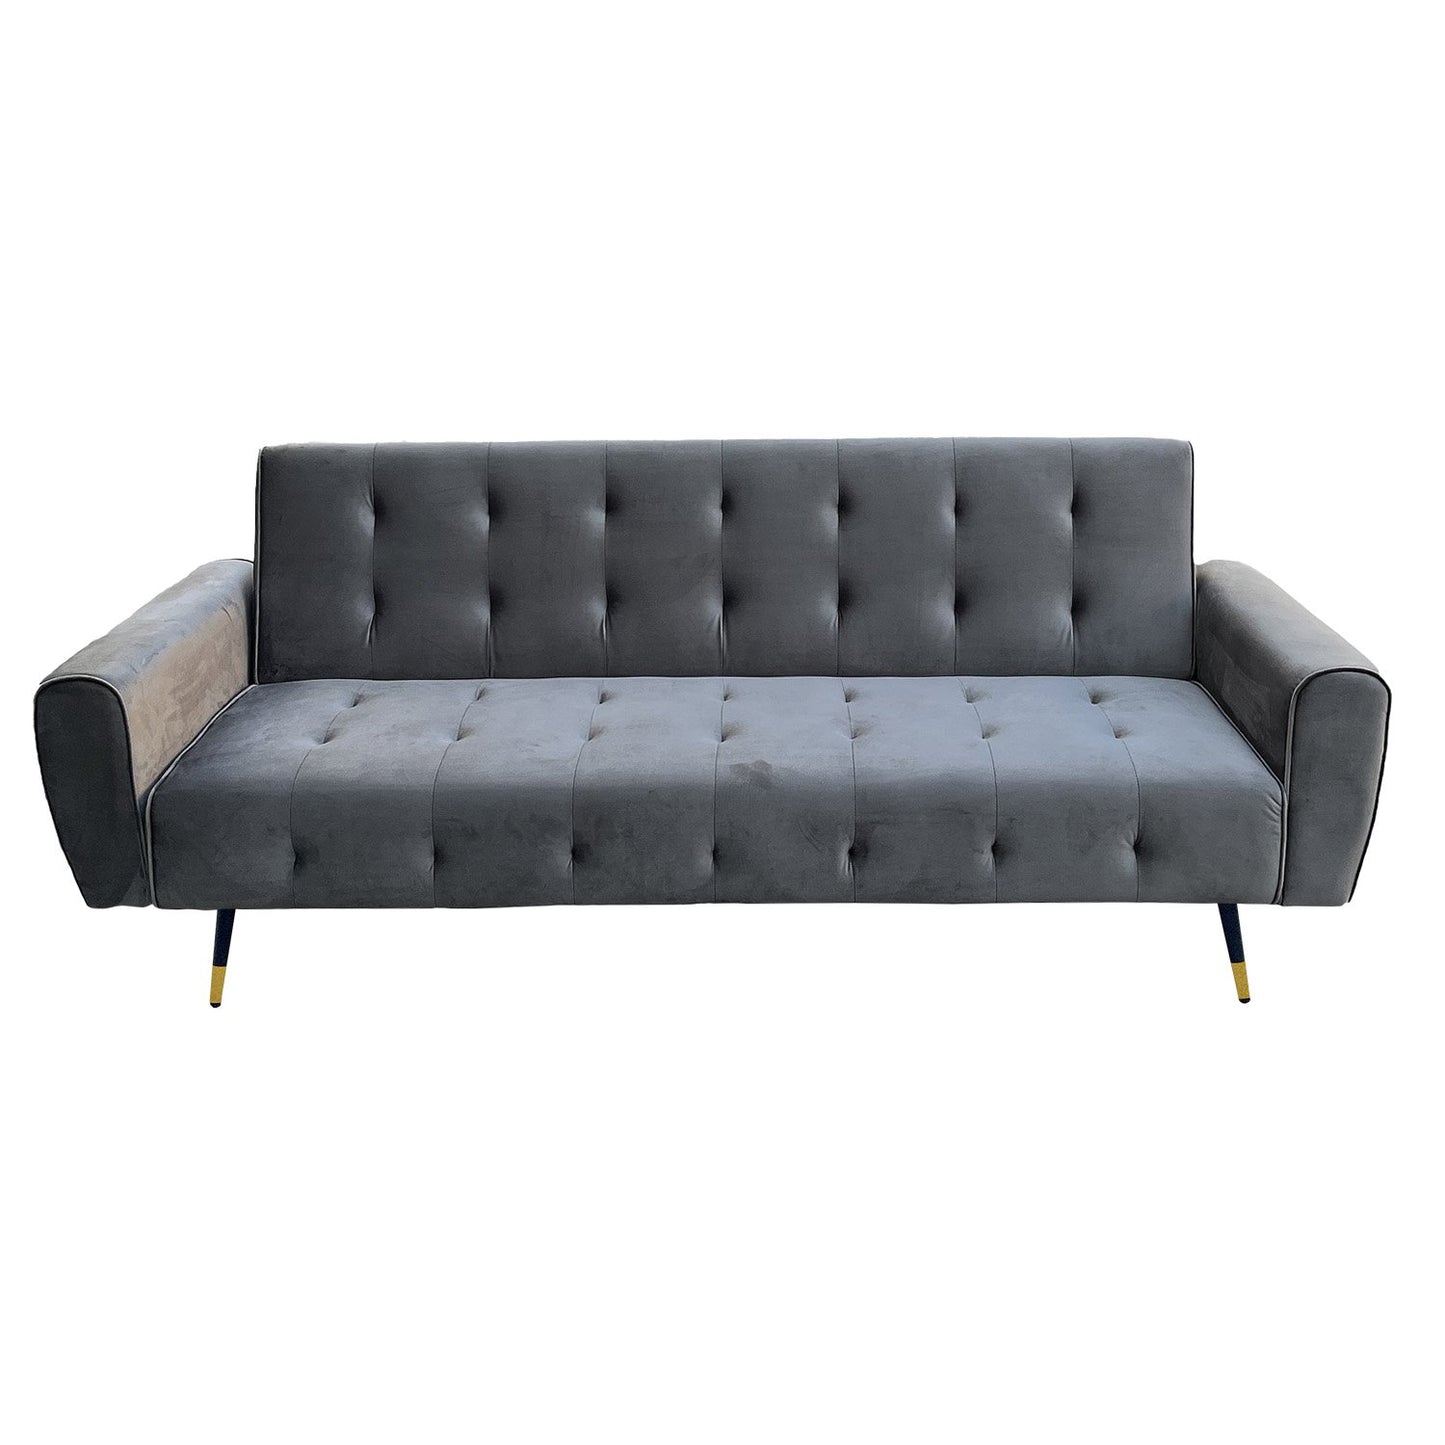 Sarantino Ava 3 Seater Tufted Velvet Sofa Bed - Dark Grey